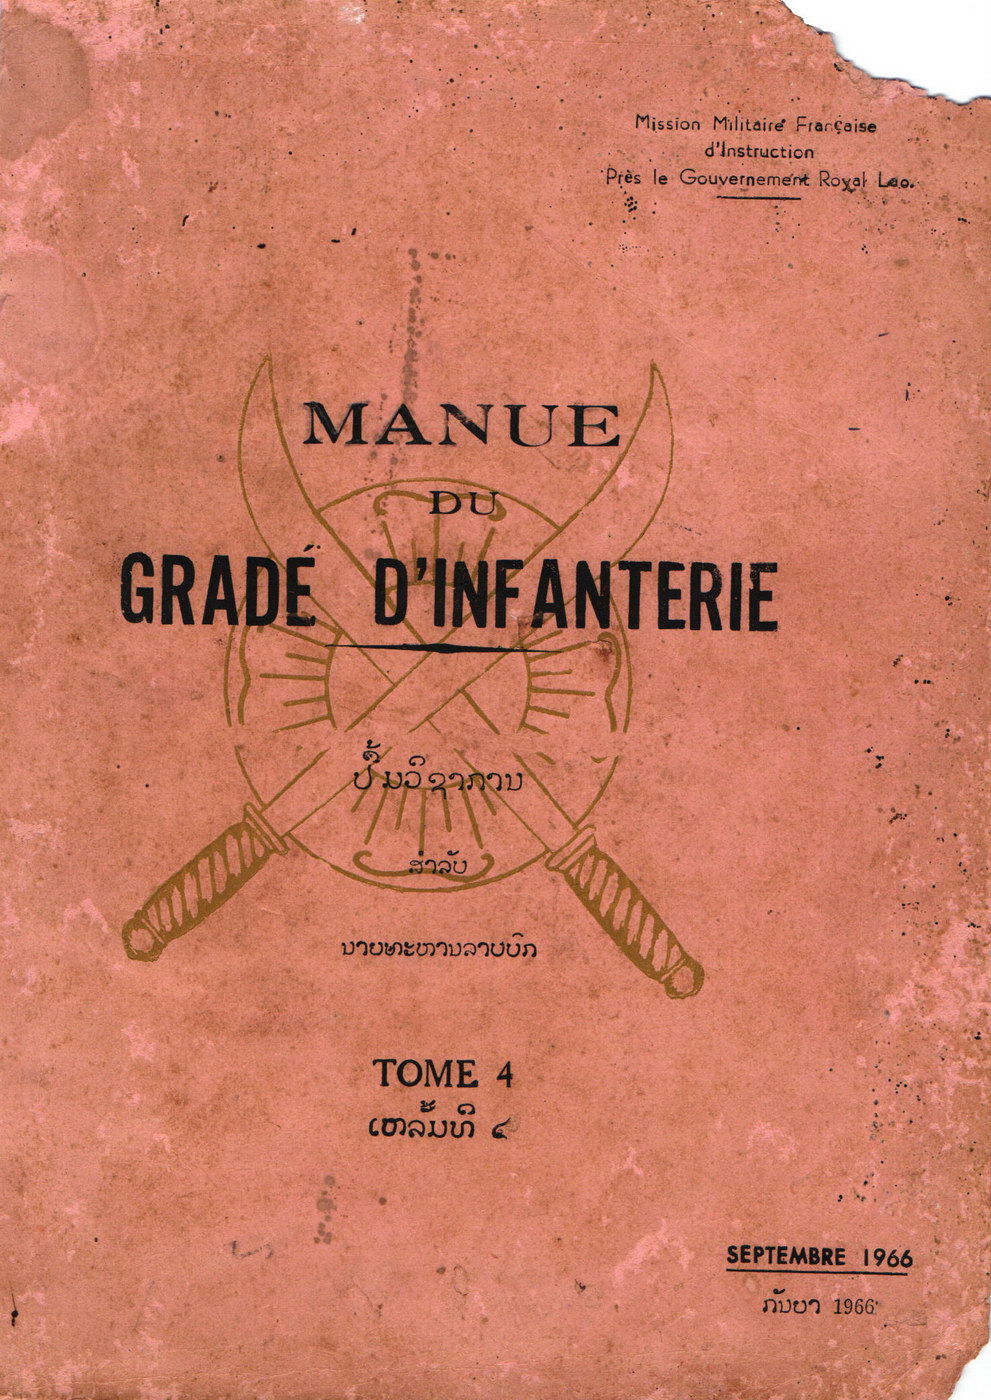 MANUE DU GRADE D'INFANTERIE TOME 4 - หนังสือวิชาการสำหรับนายทหารลาบบก 4